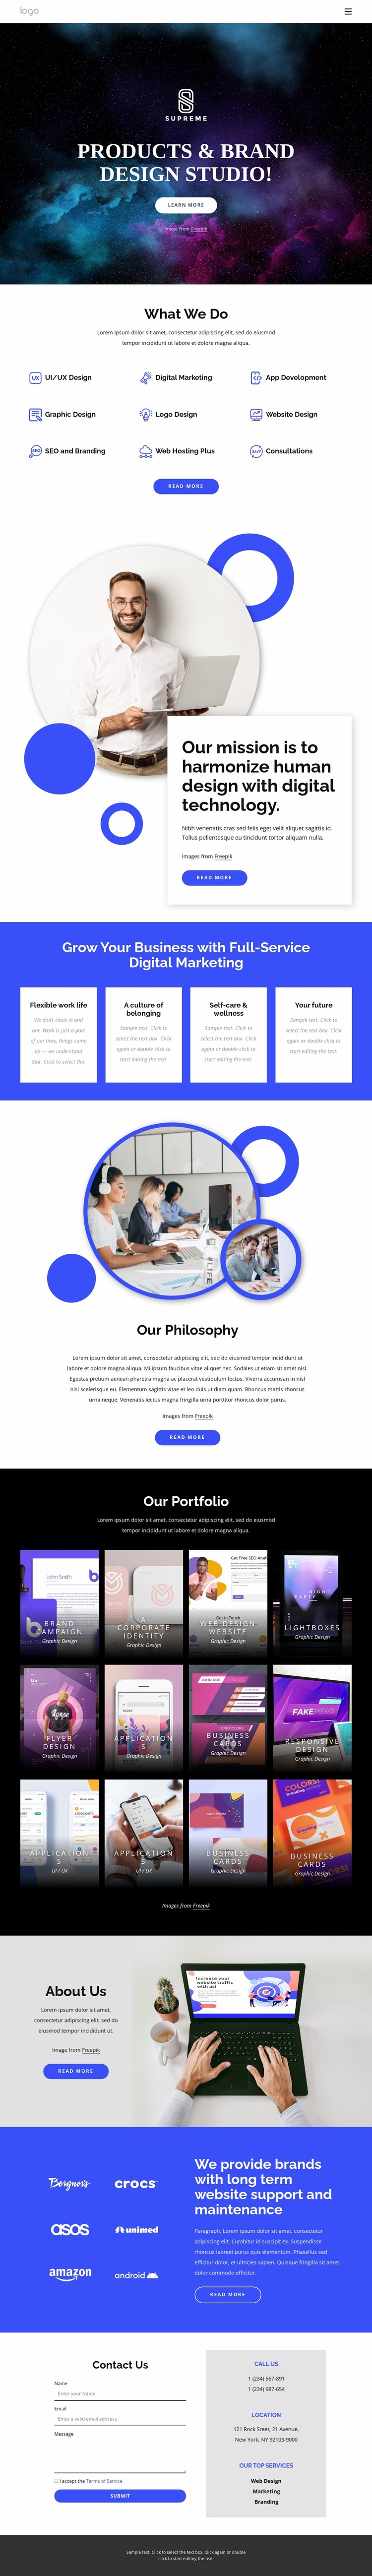 Products and brand design studio Website Mockup